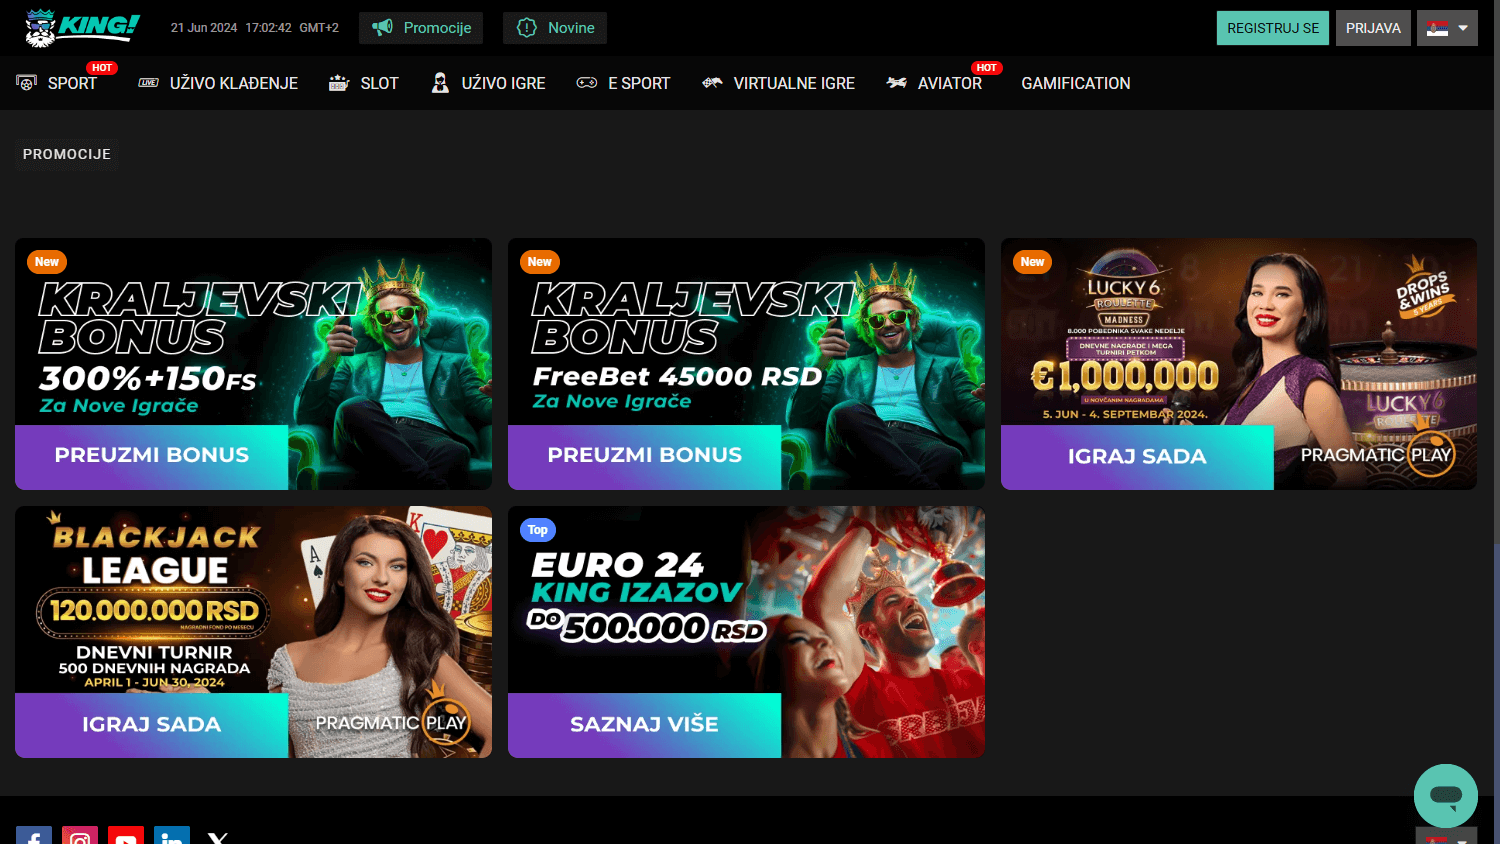 king.rs_casino_promotion_desktop